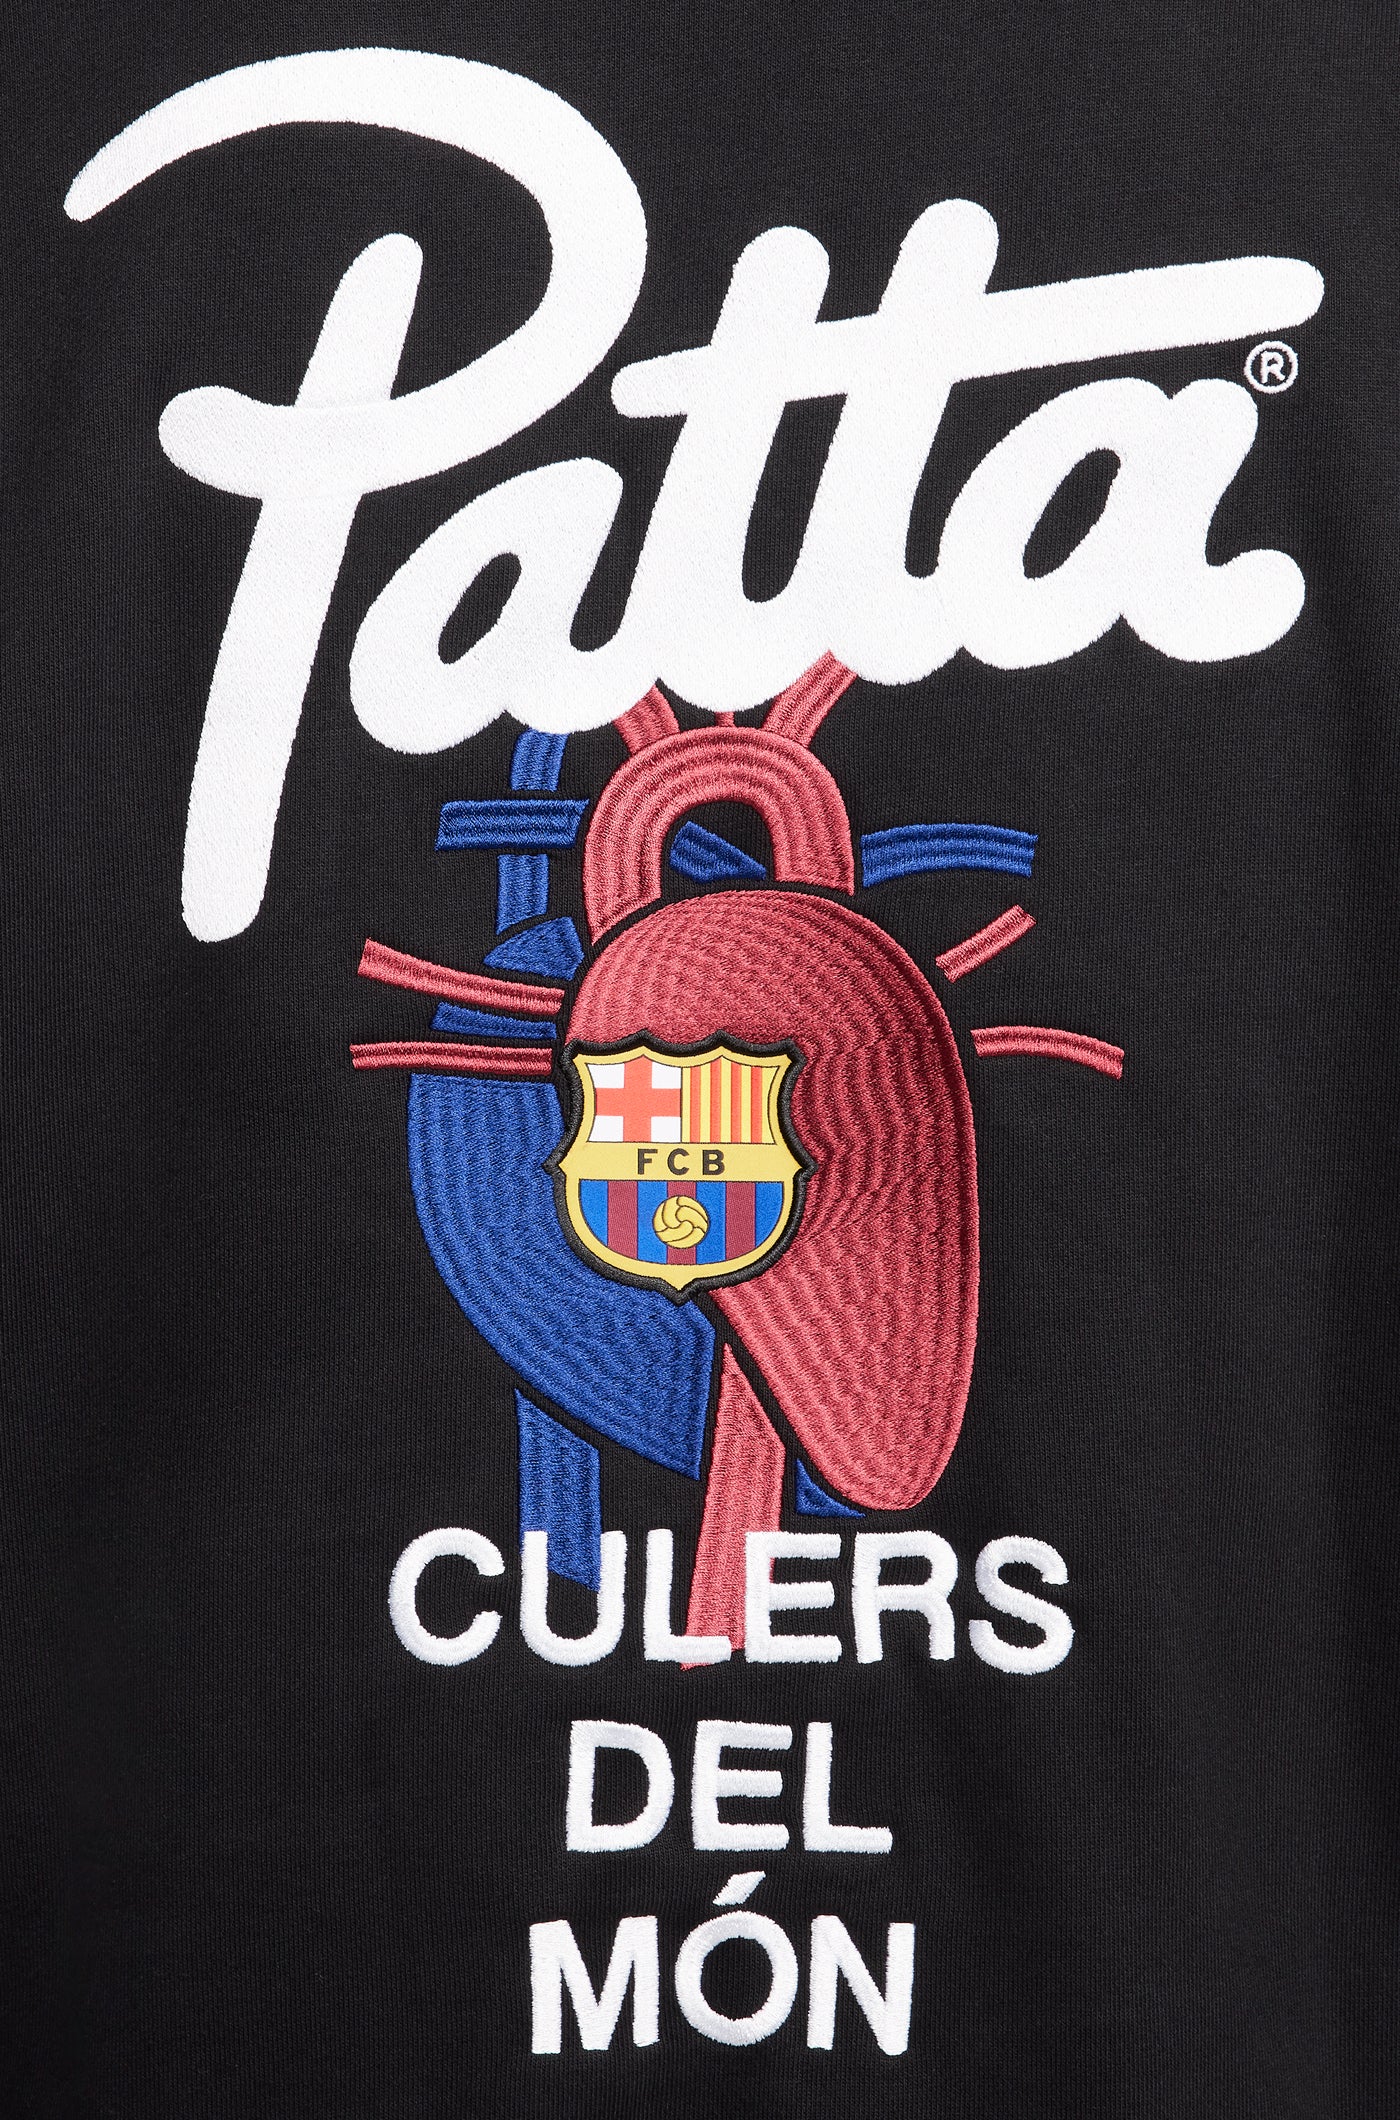 Sudadera con capucha FC Barcelona x Patta en color negro